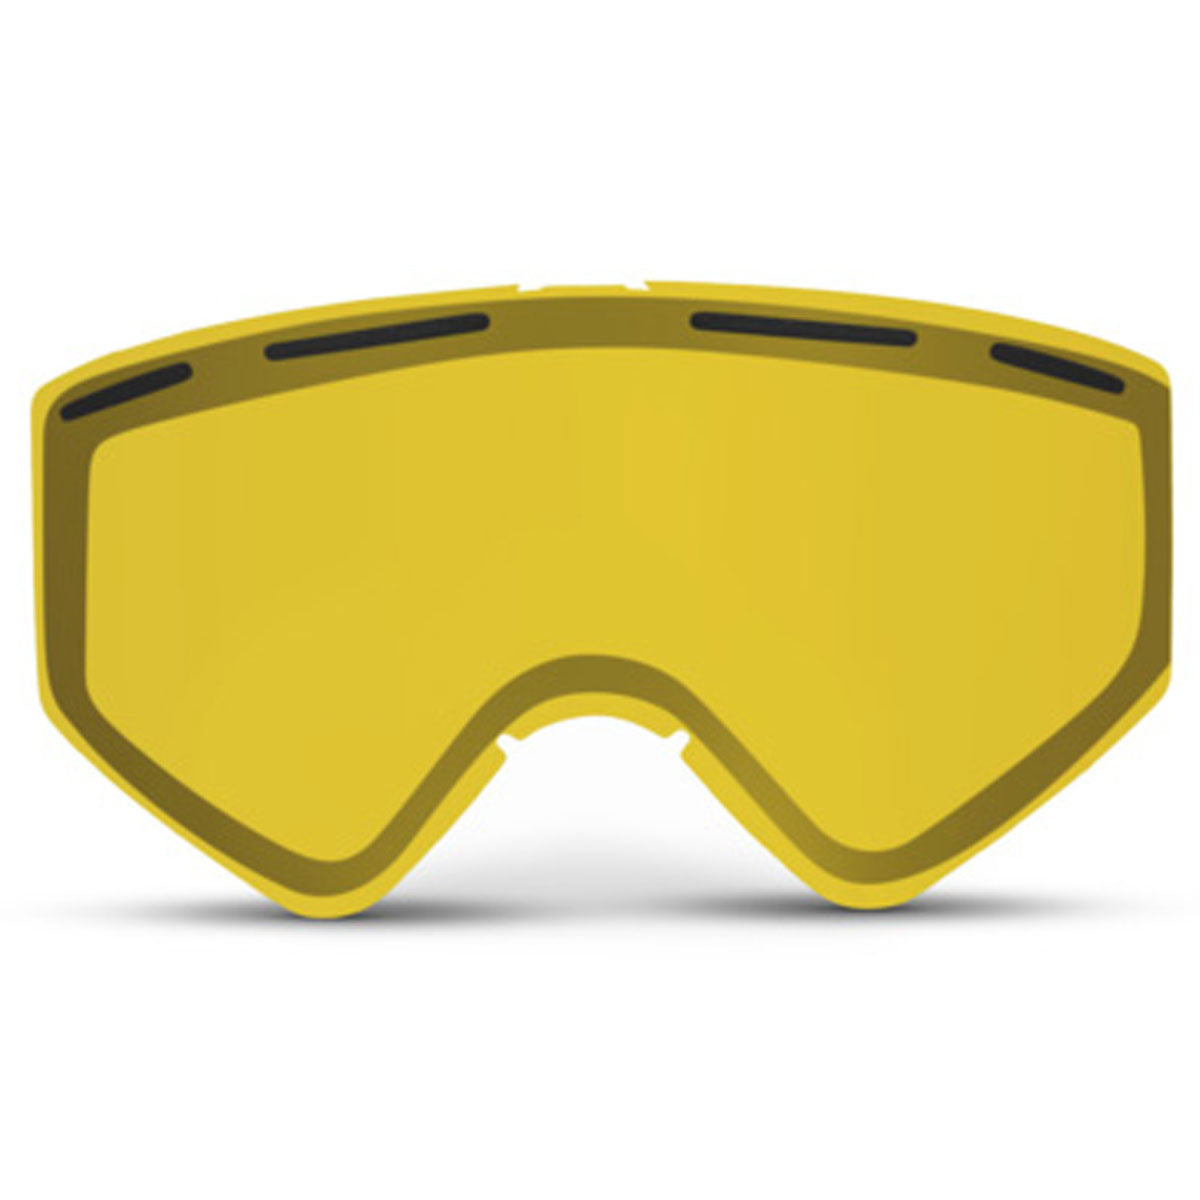 Ashbury Blackbird White Triangle Snowboard Goggles - Dark Smoke/Yellow Spare image 3